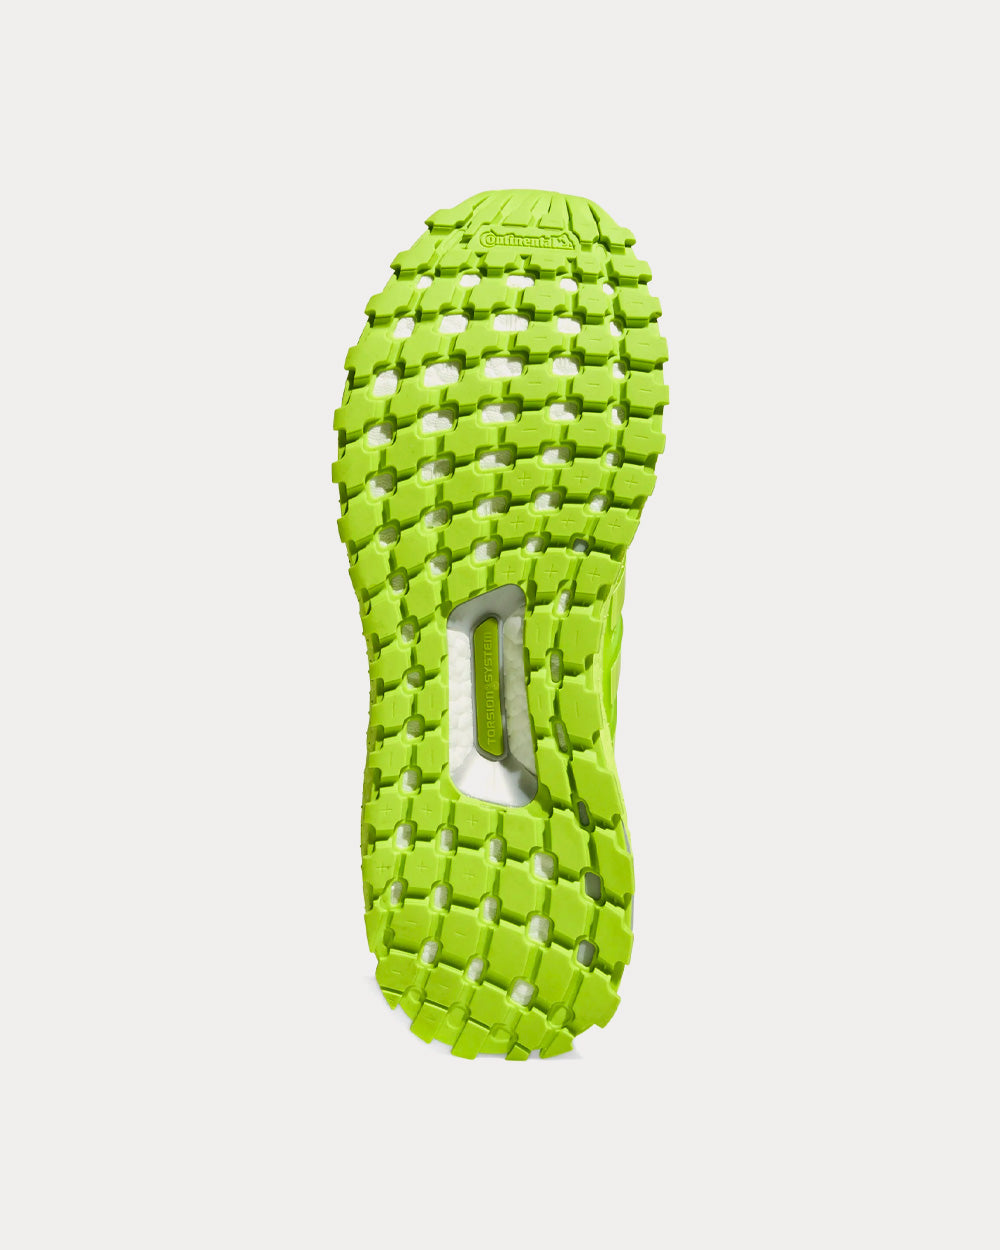 Adidas x Ivy Park - UltraBOOST Solar Green / Signal Green / Semi Solar Green Running Shoes